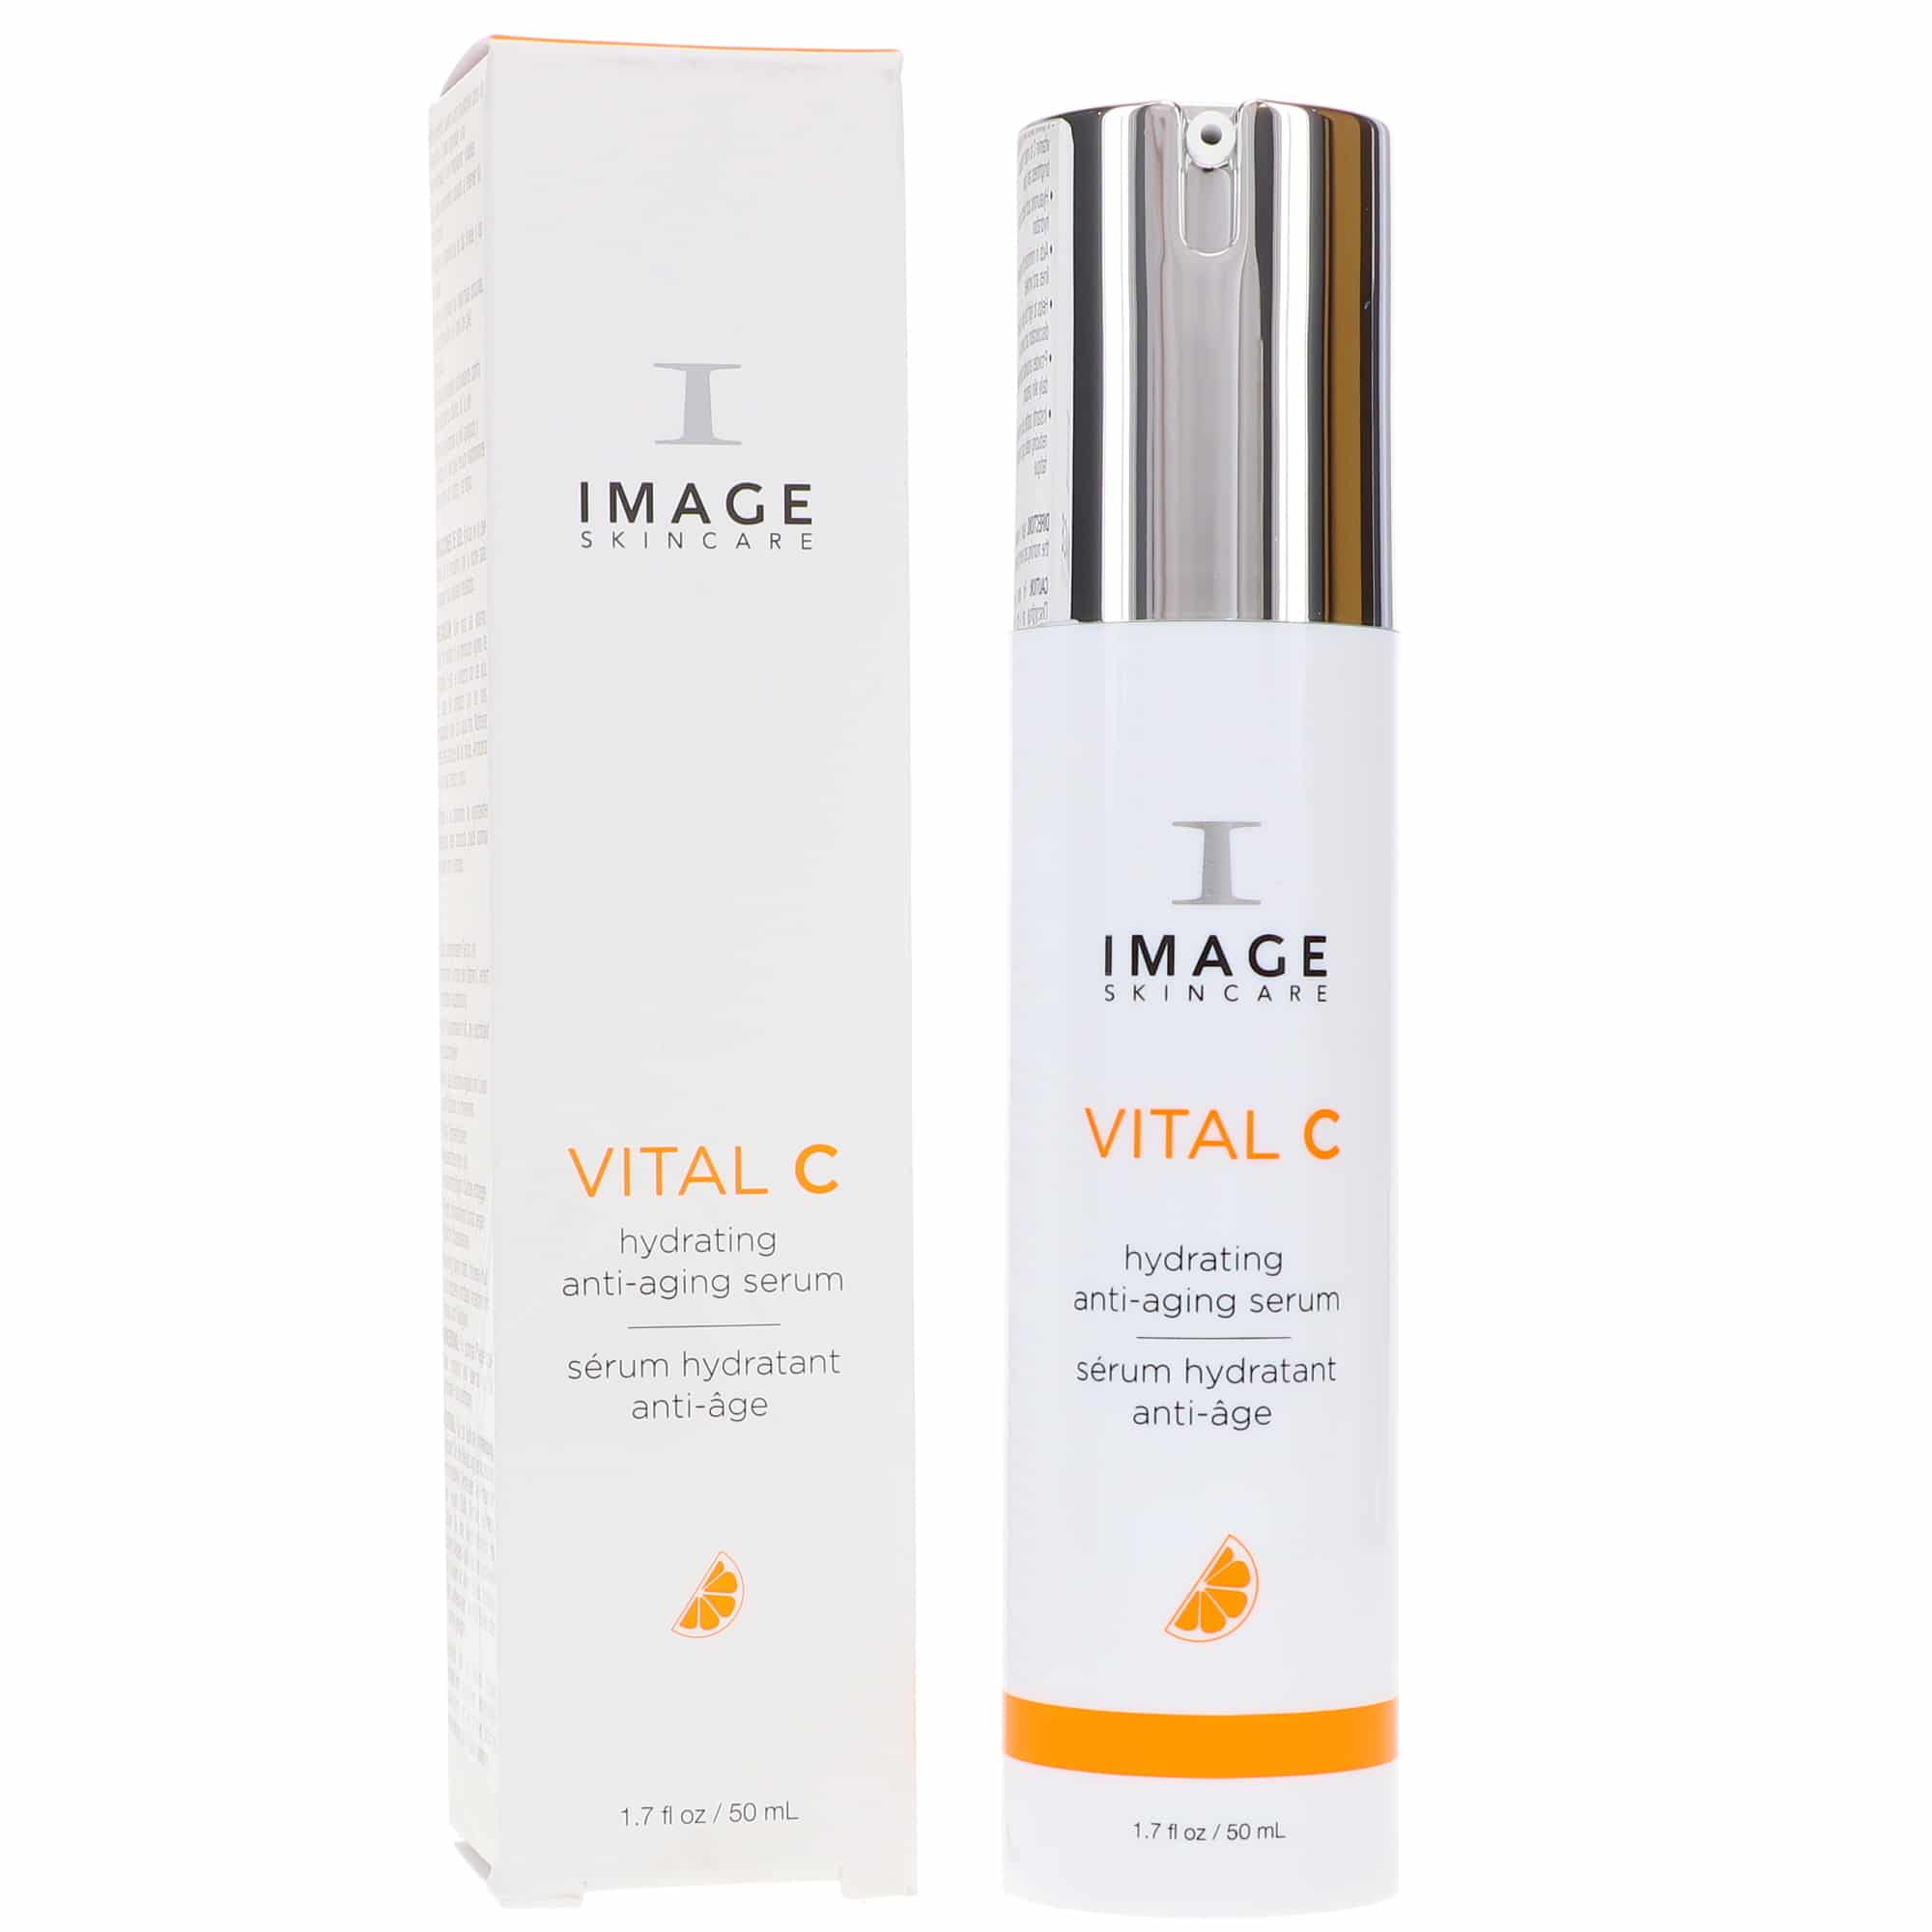 image skincare vital c hydrating anti aging serum ingredients